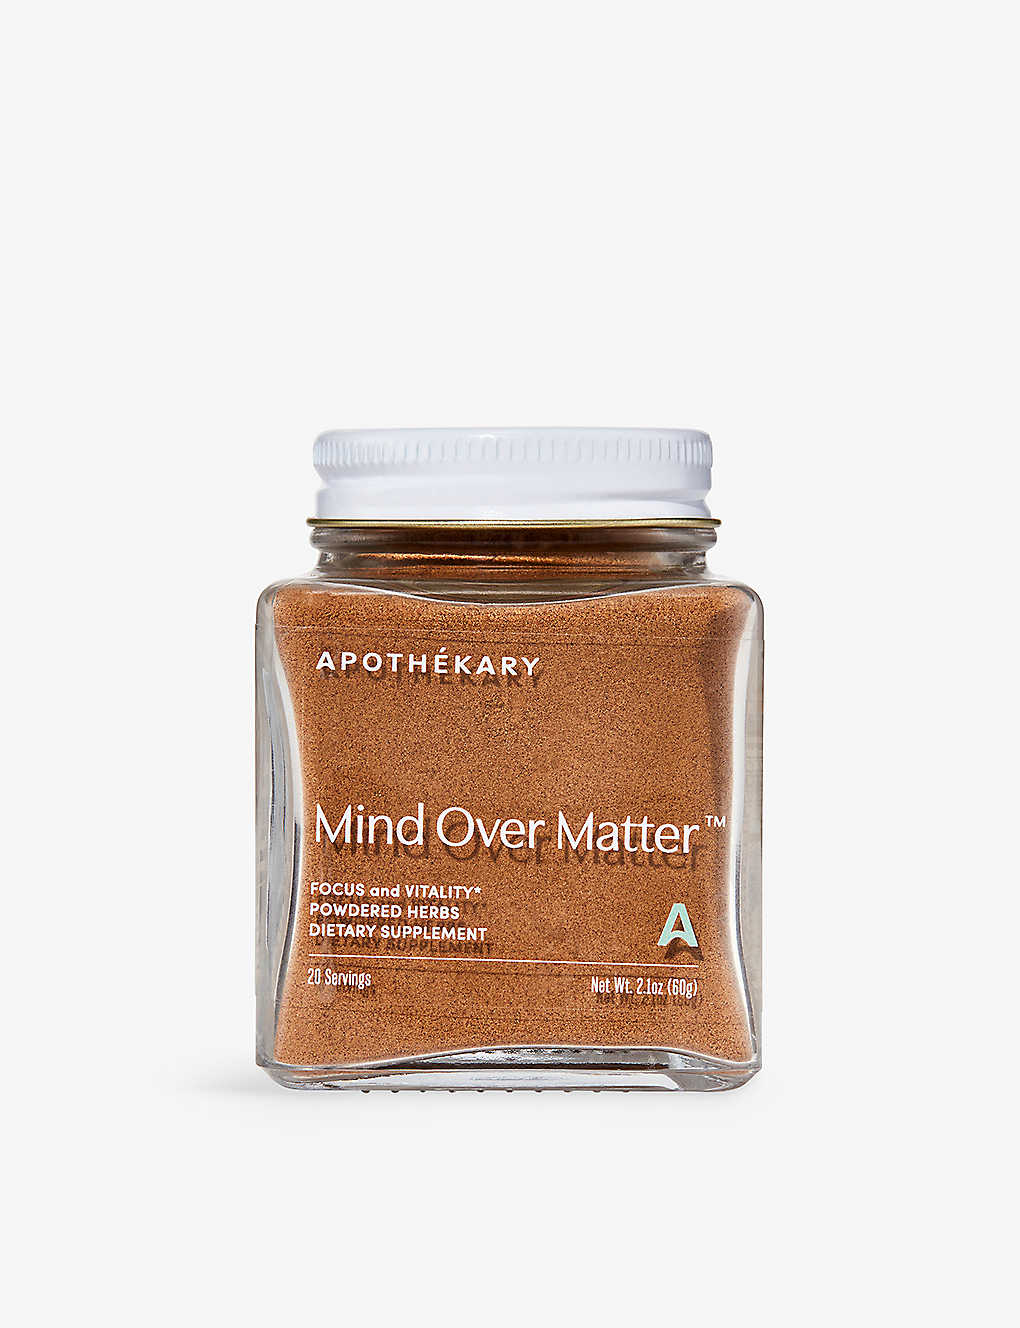 Apothekary Mind Over Matter Herbal Supplement 60g